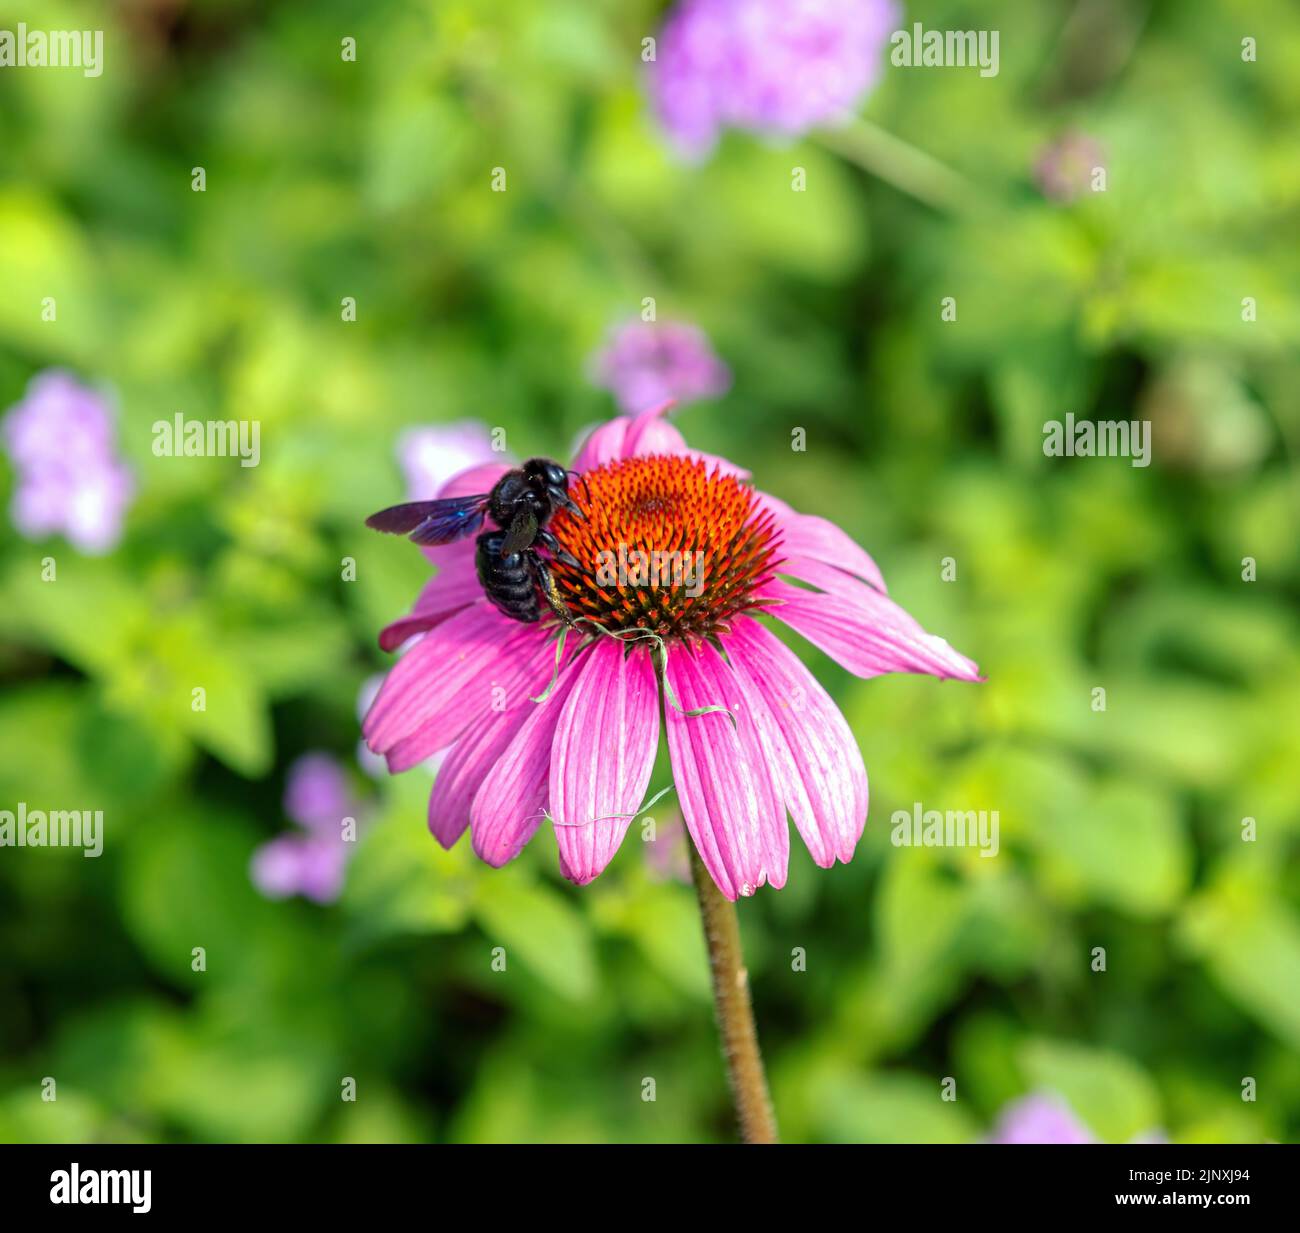 Echinacea purpurea and pollination. Honey bee on purple hedgehog coneflower, close up view Stock Photo